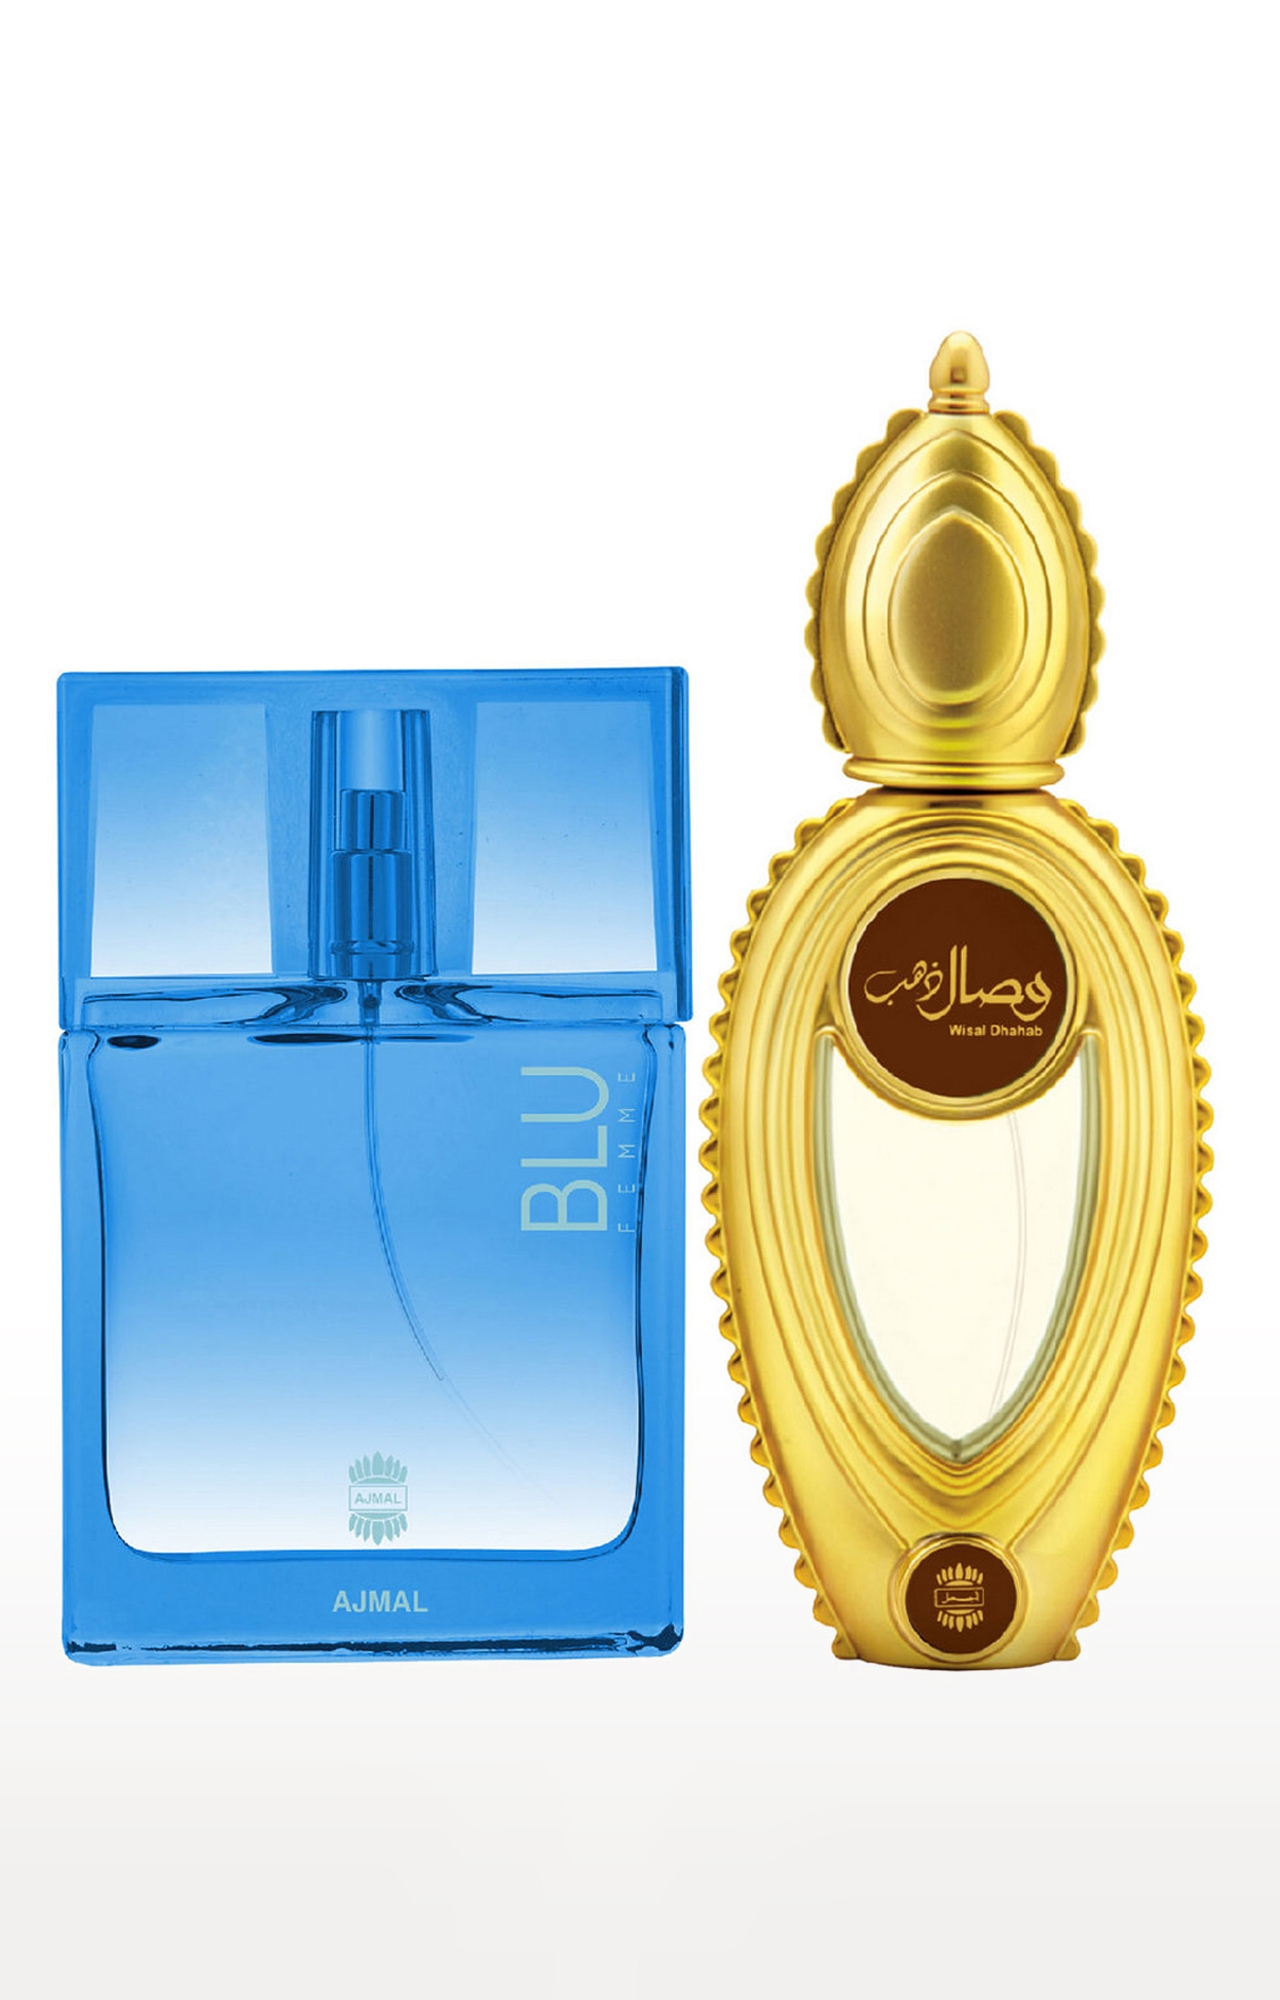 Ajmal Blu Femme EDP Perfume 50ml for Women and Wisal Dhahab EDP Fruity Perfume 50ml for Men